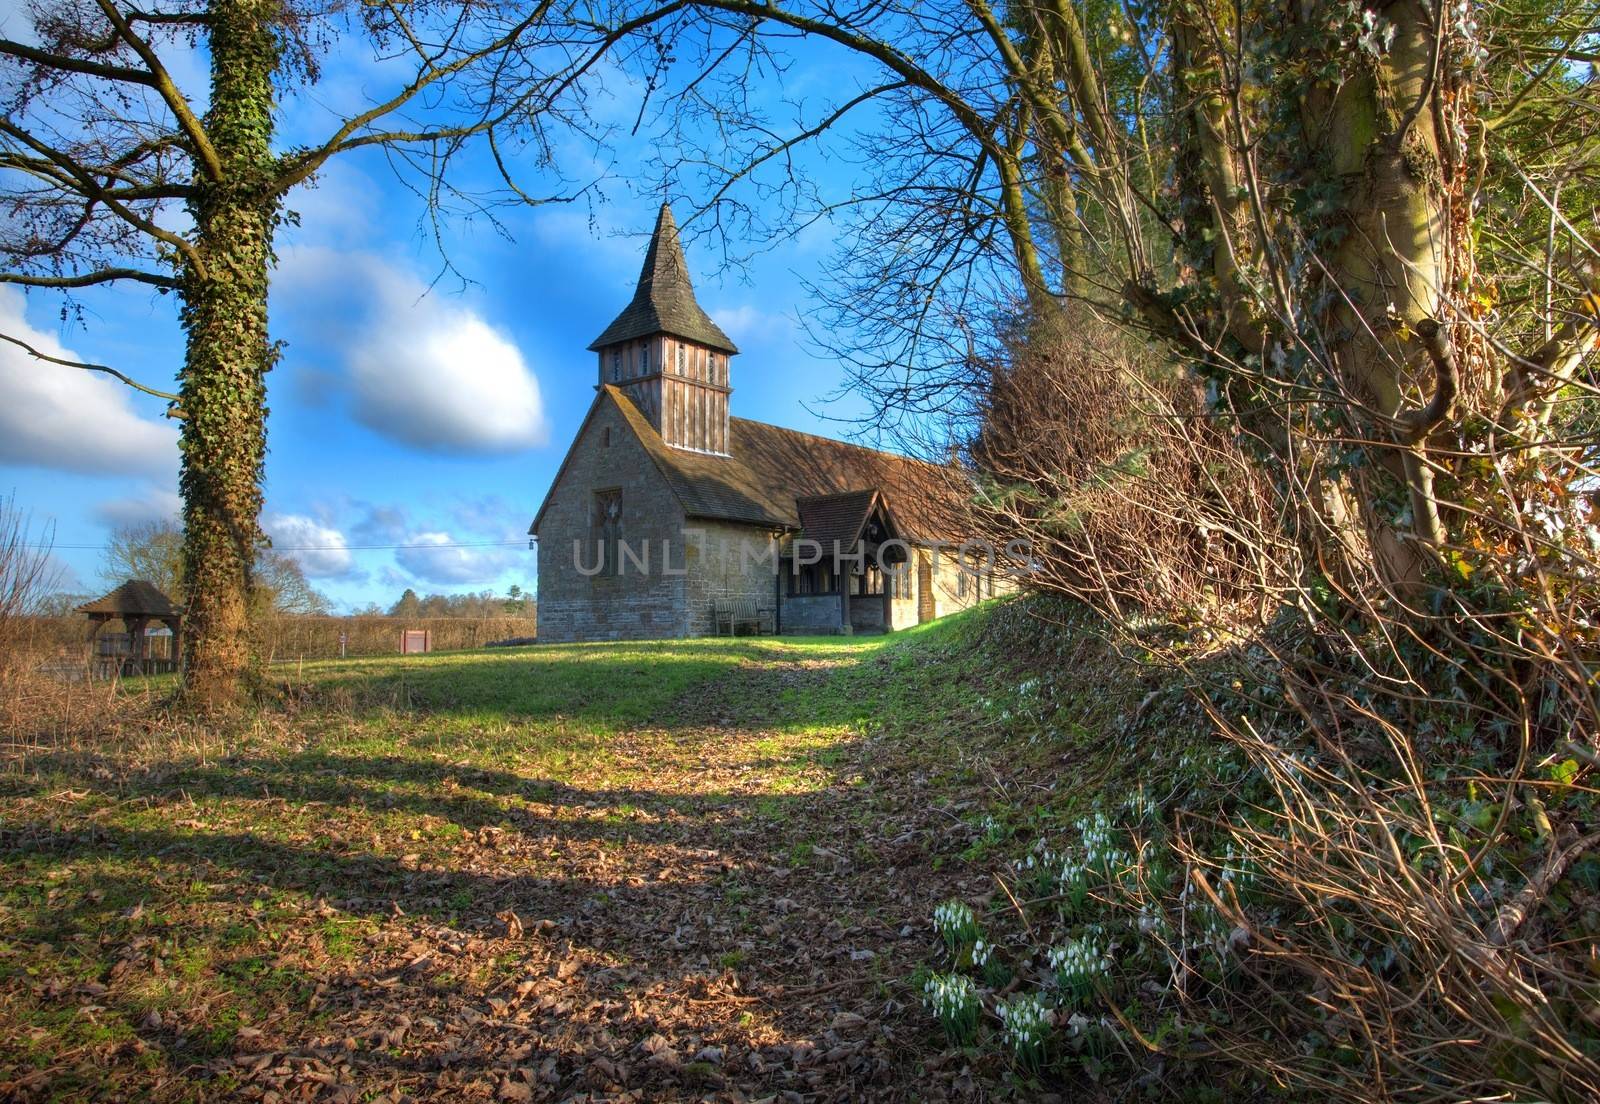 The Parish Church of St Mary, Oldberrow, Warwickshire, England.